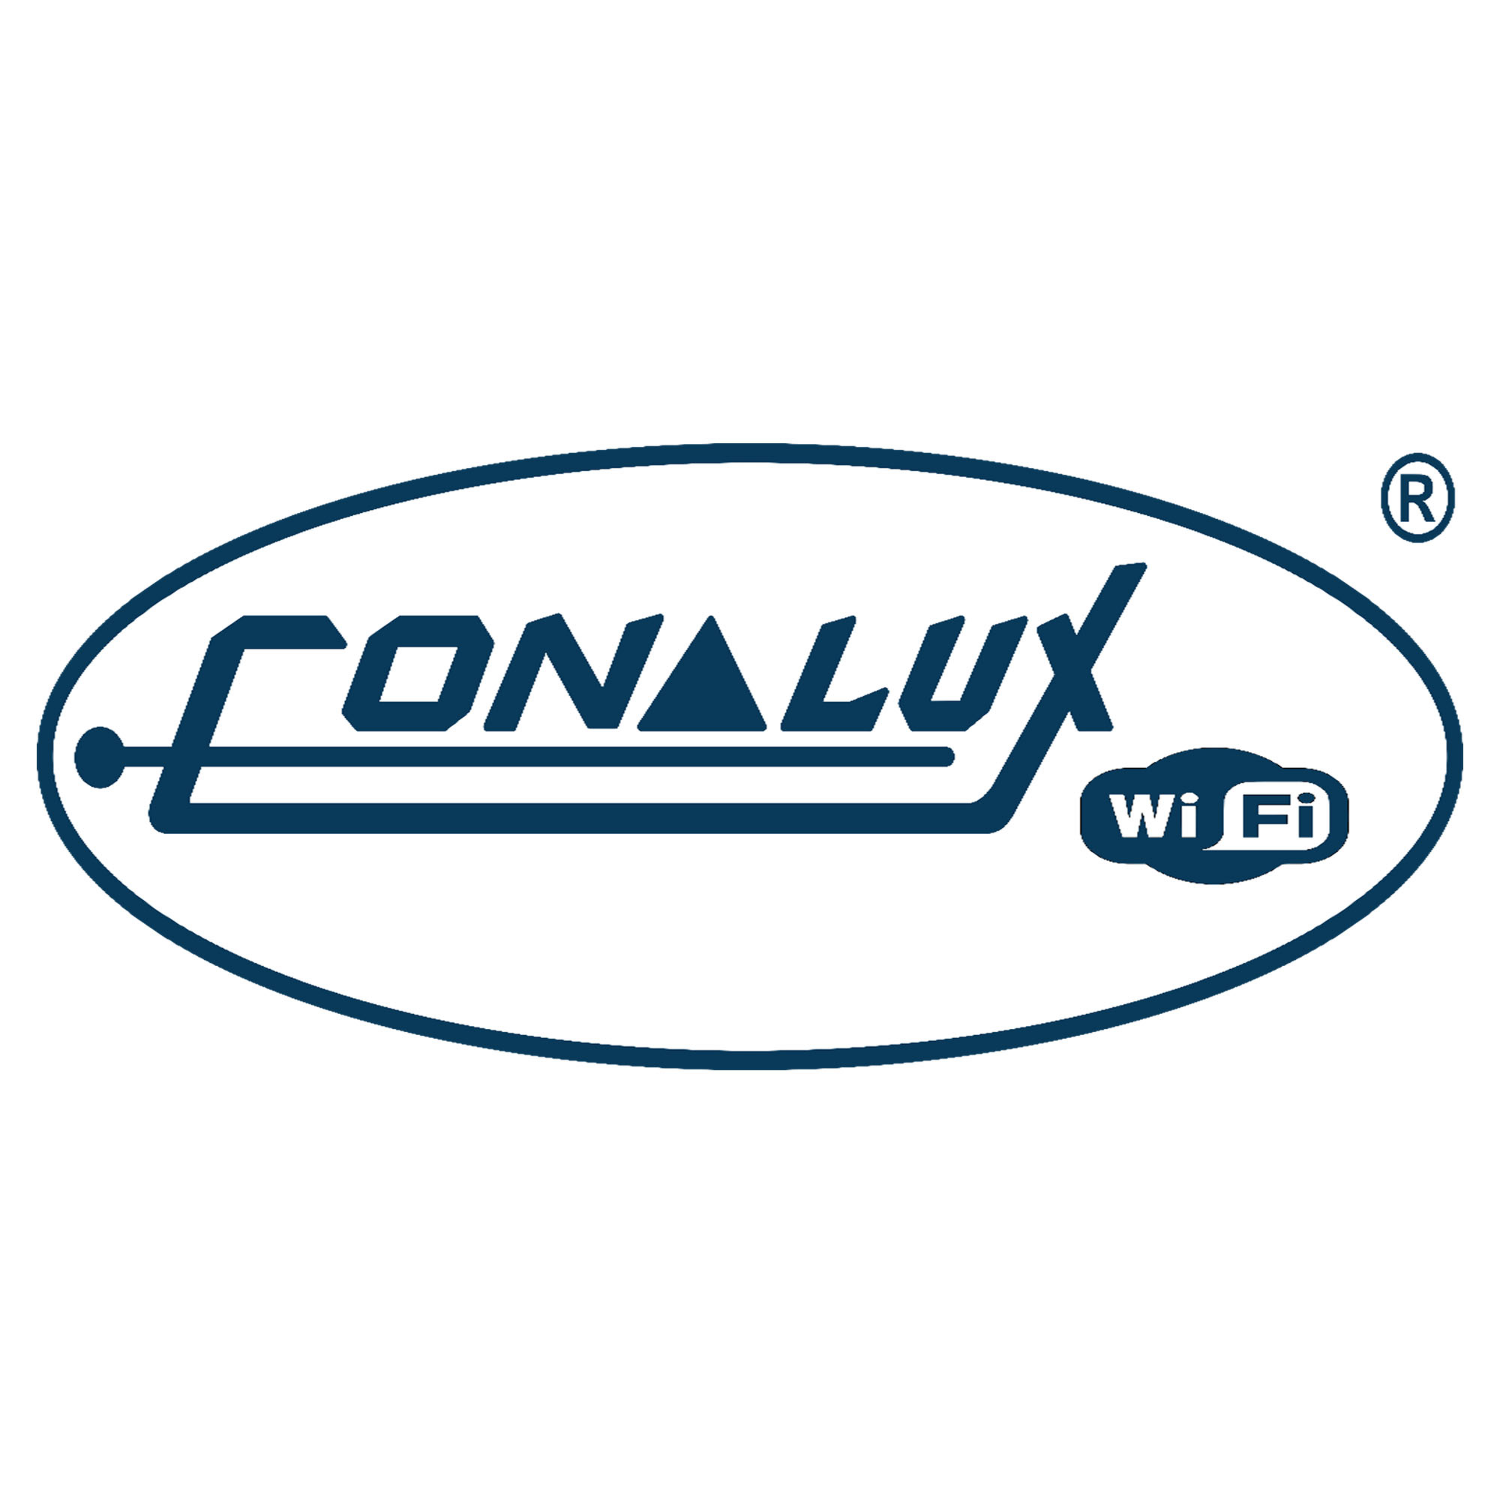 Conalux Wi-Fi